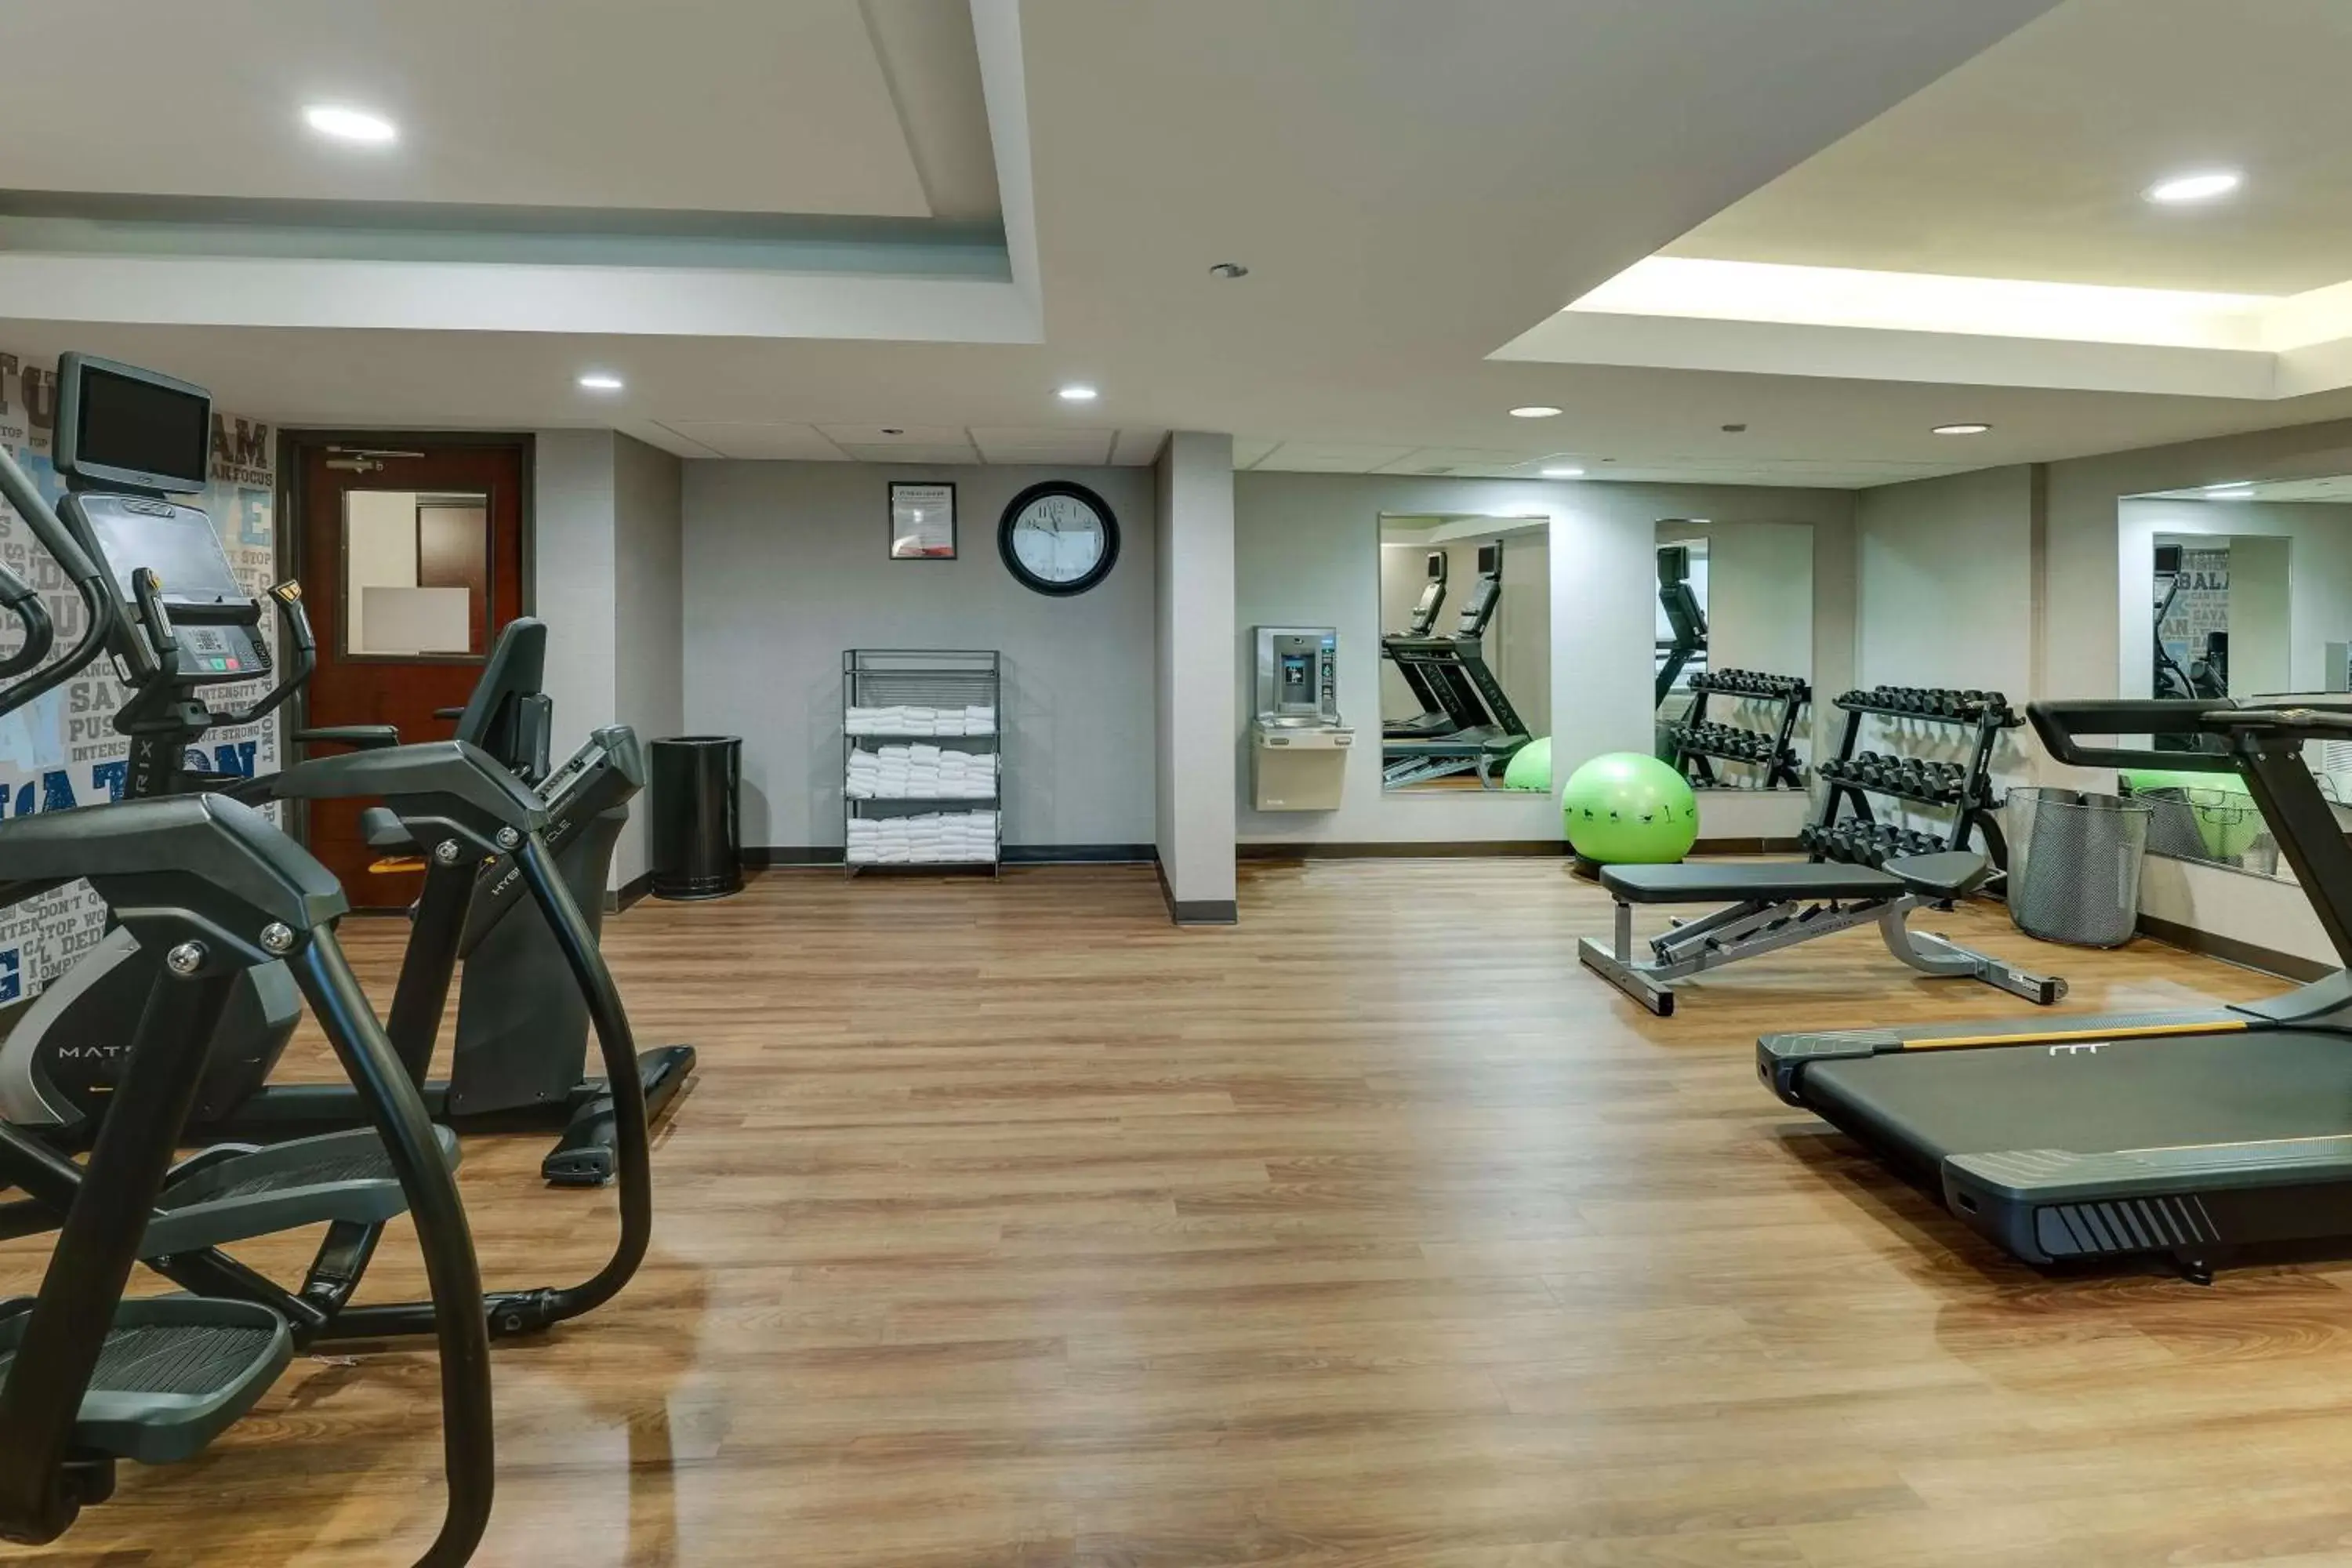 Fitness centre/facilities, Fitness Center/Facilities in Drury Inn & Suites St Joseph